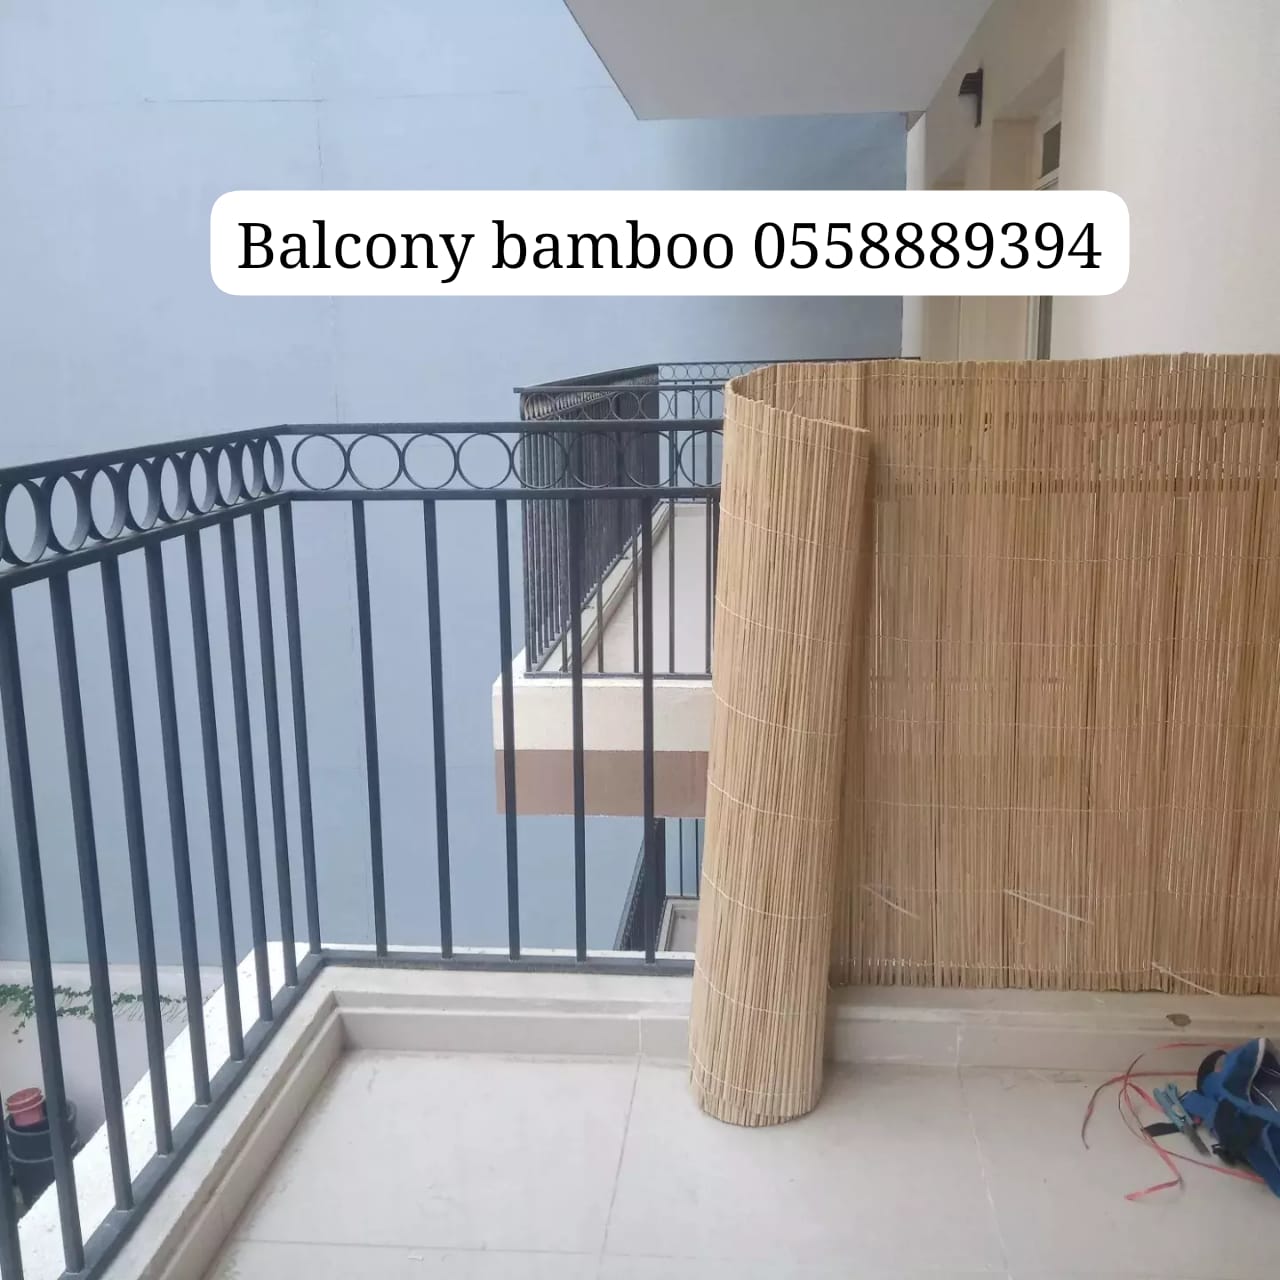 Balcony bamboo.jpeg